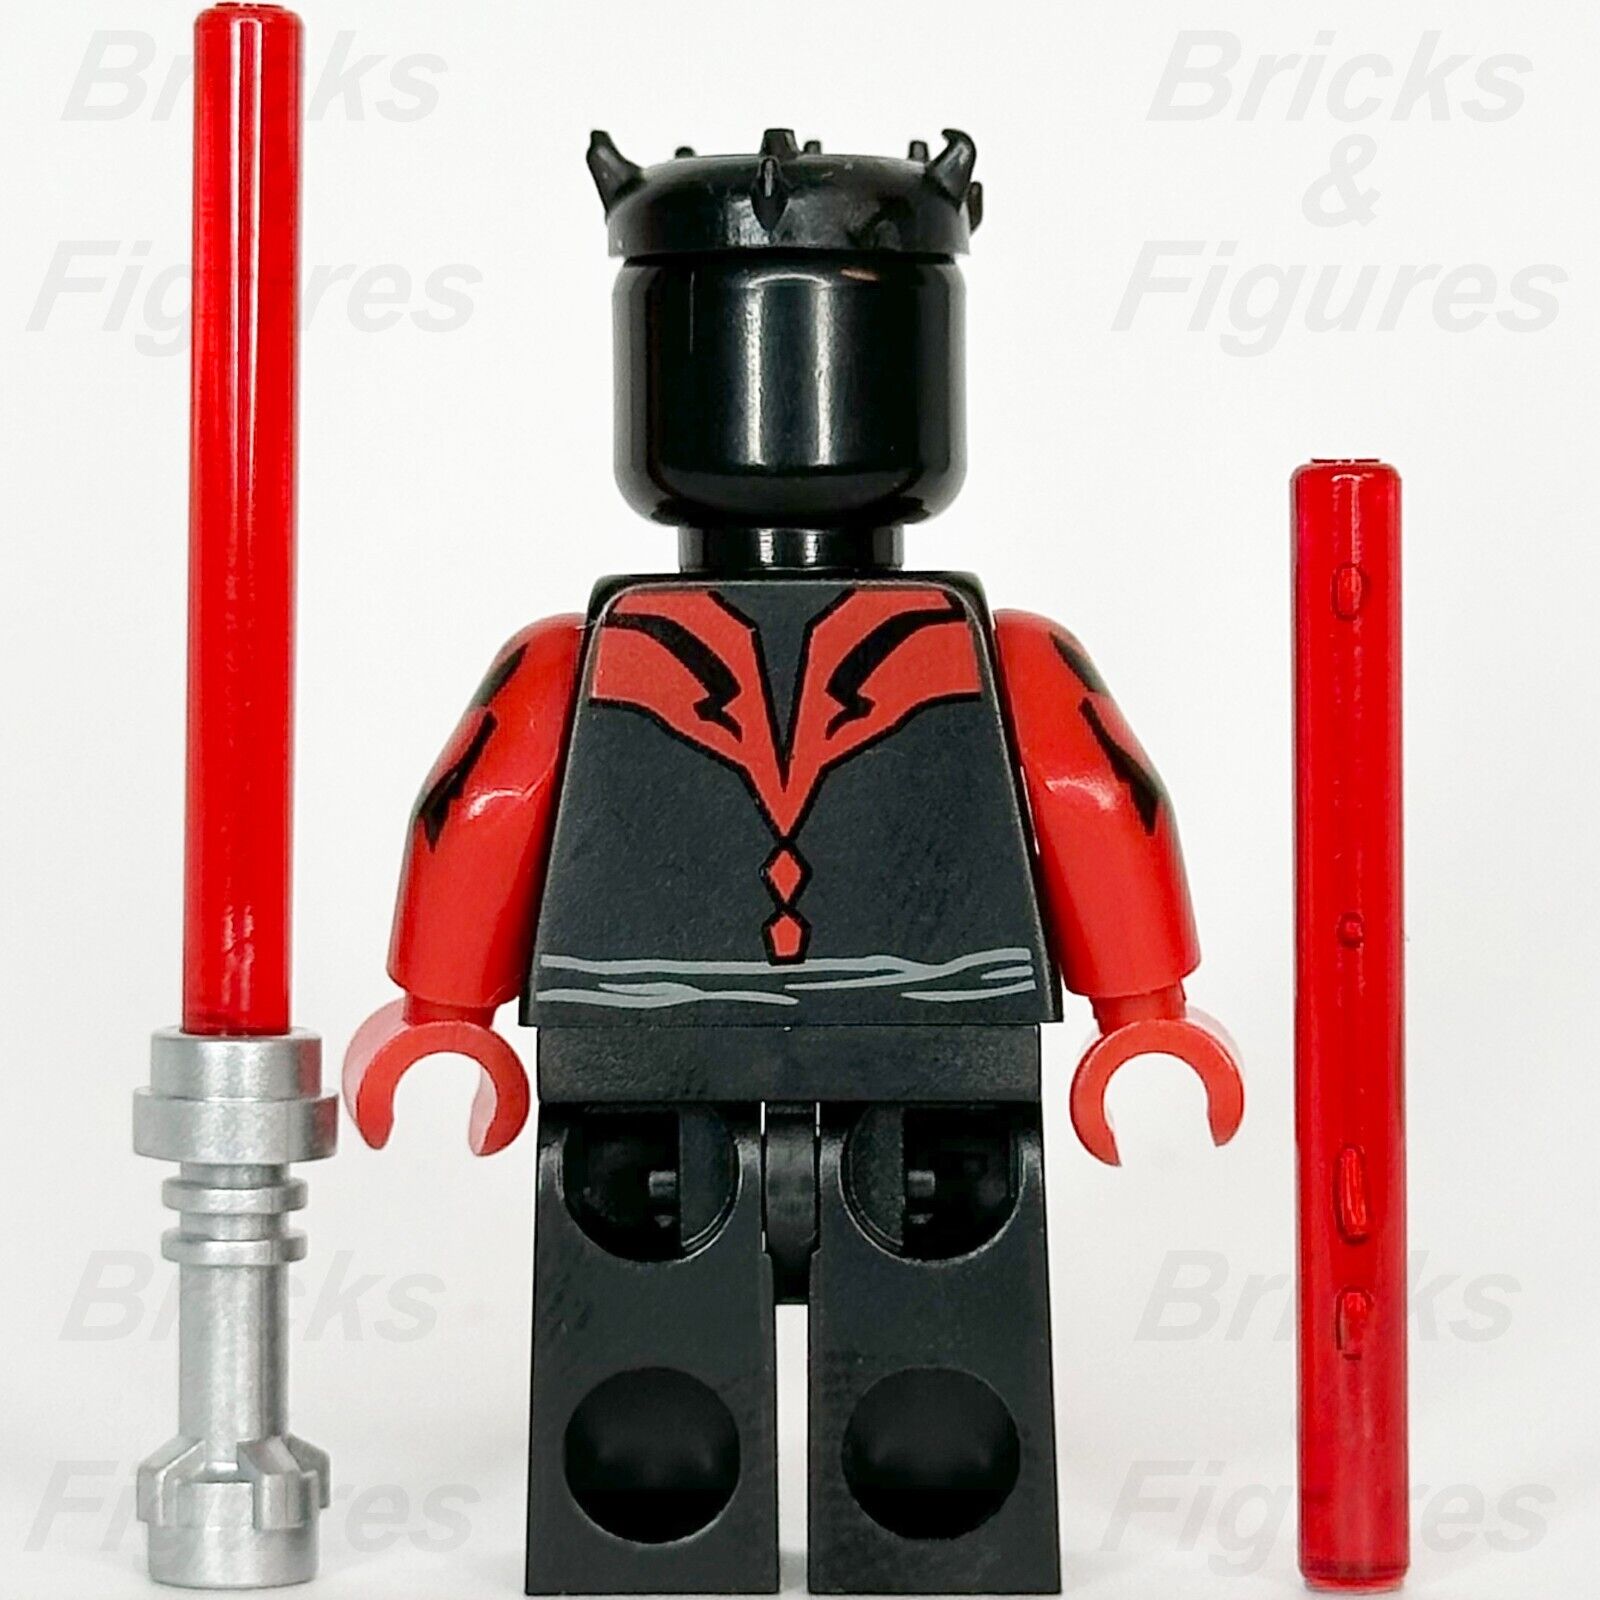 LEGO Star Wars Darth Maul Minifigure Printed Red Arms Sith Lord 5000062 sw0384 - Bricks & Figures